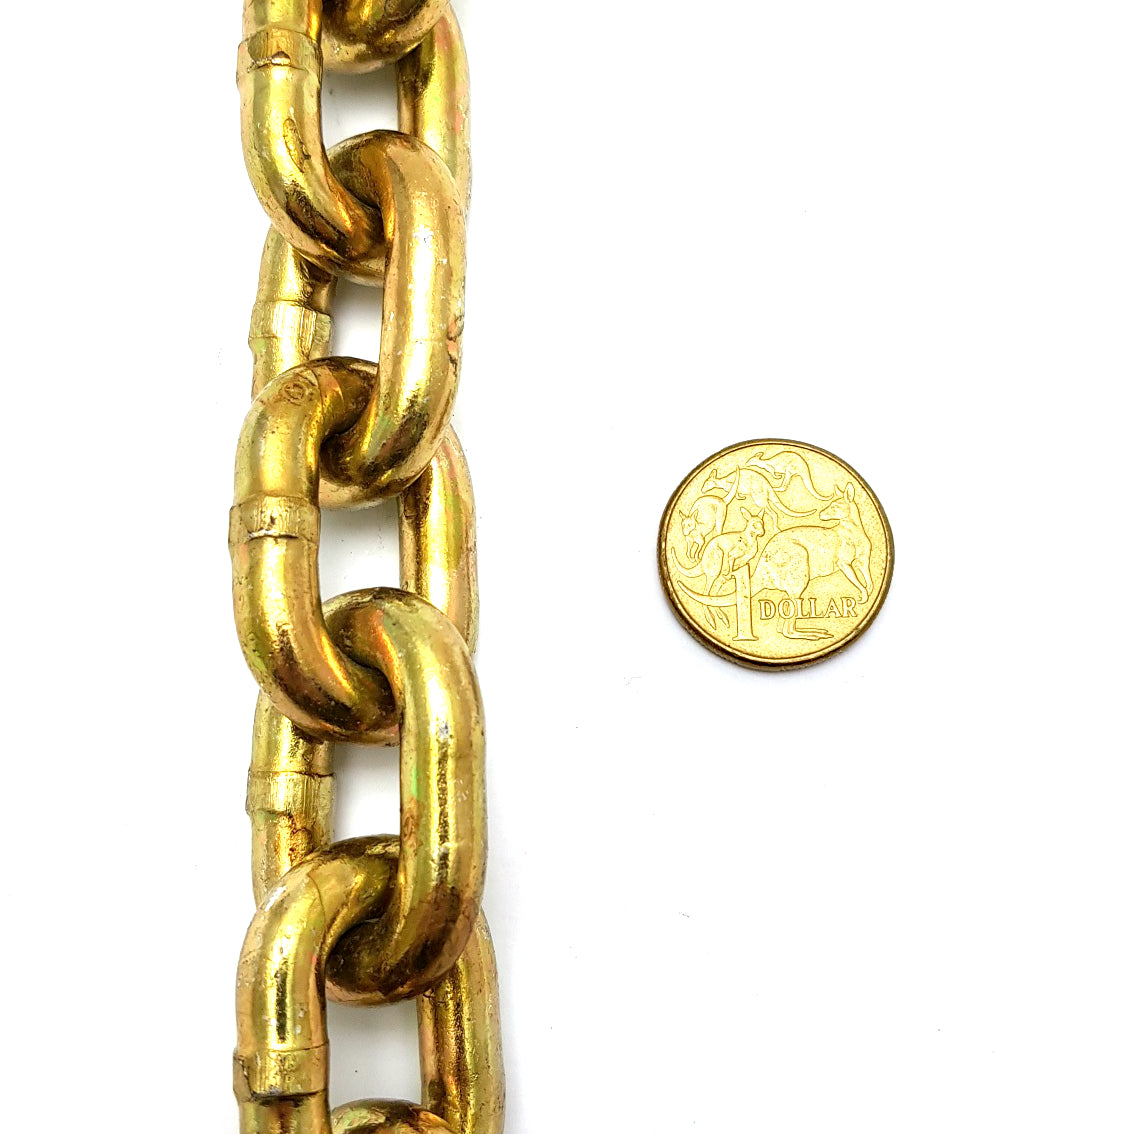 Security Chain, size 8mm, qty 5m. Melbourne, Australia.